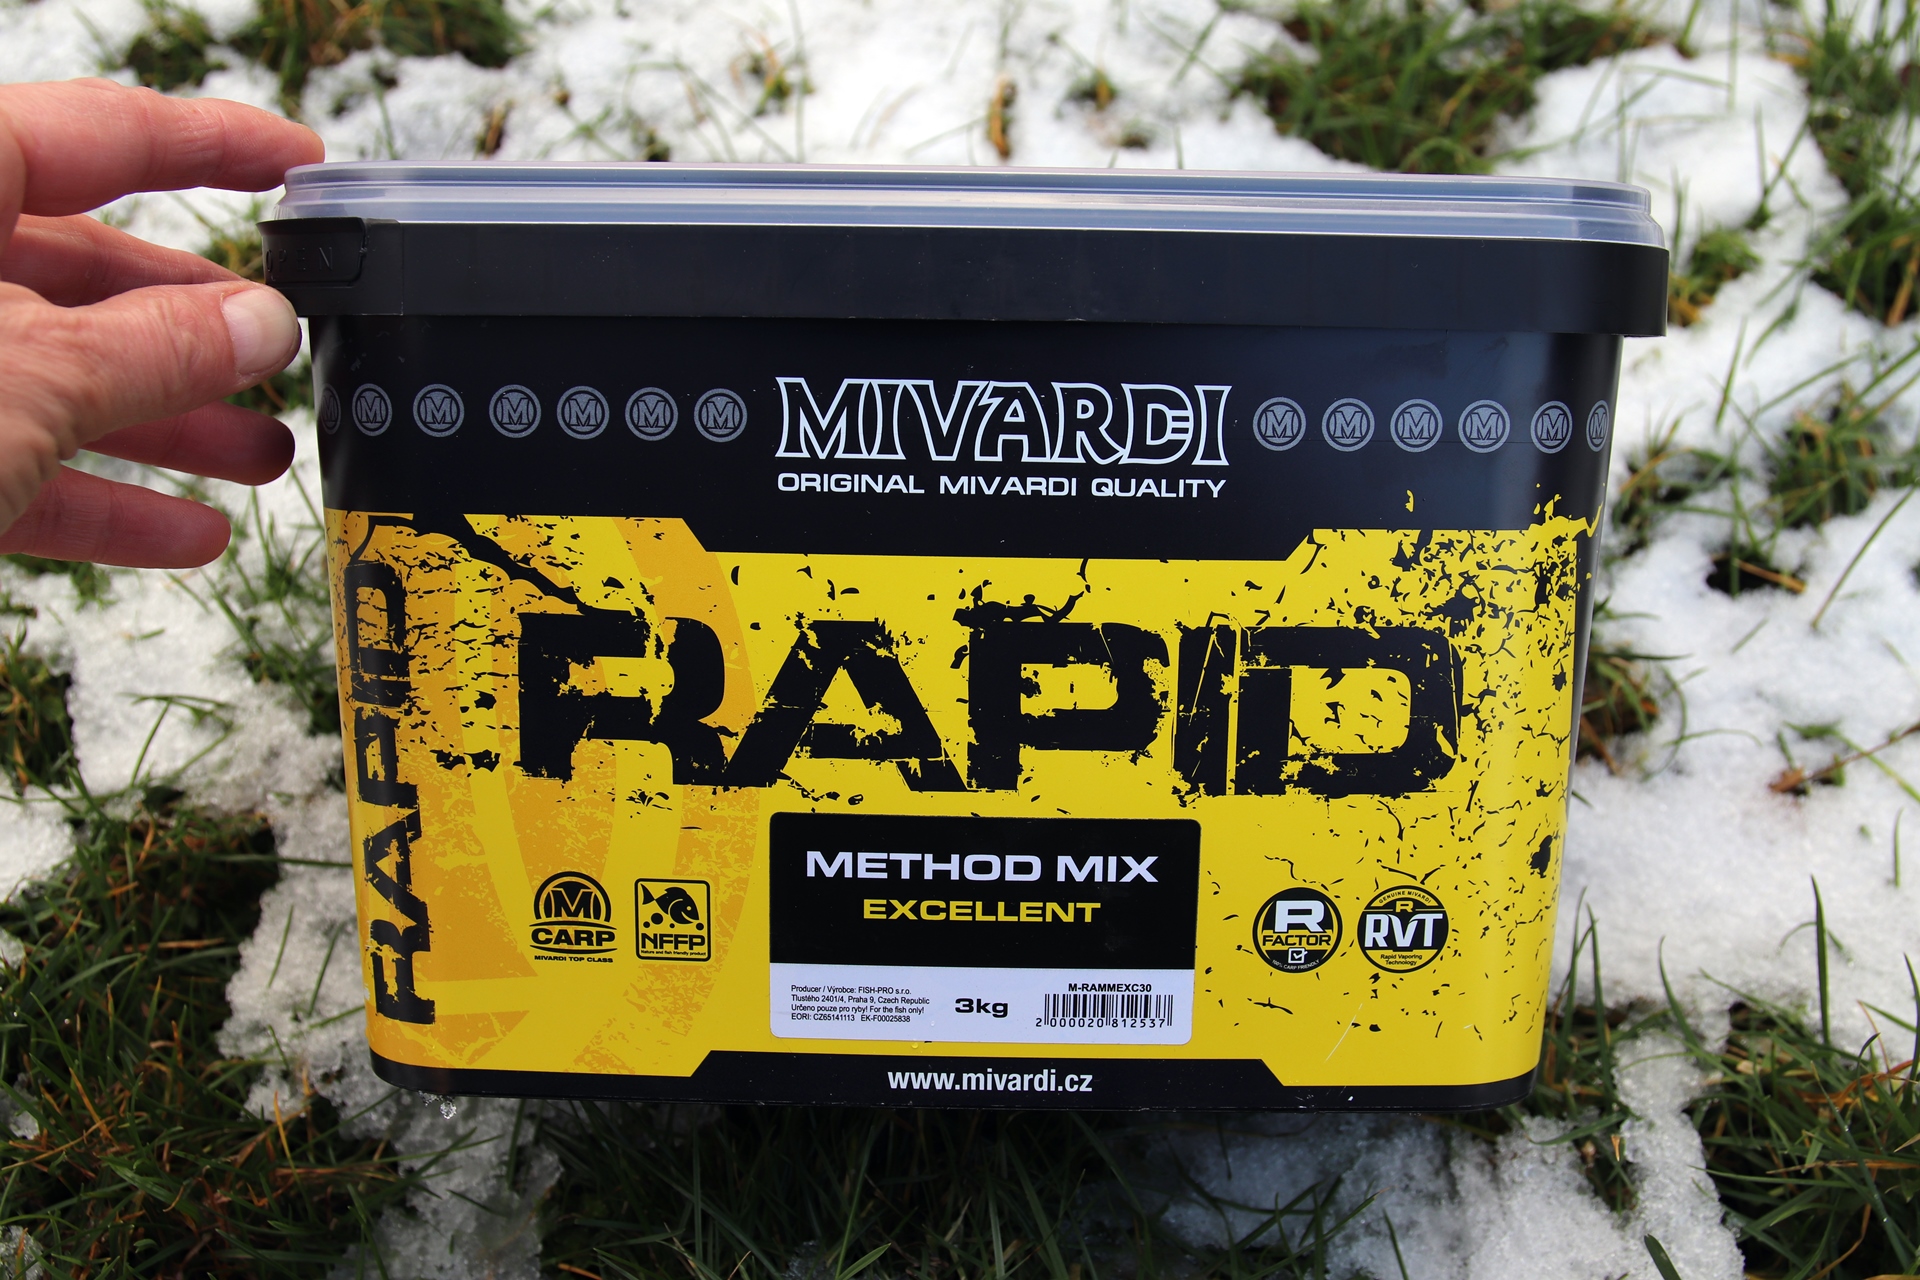 Method mix Mivardi Rapid Excellent 3kg